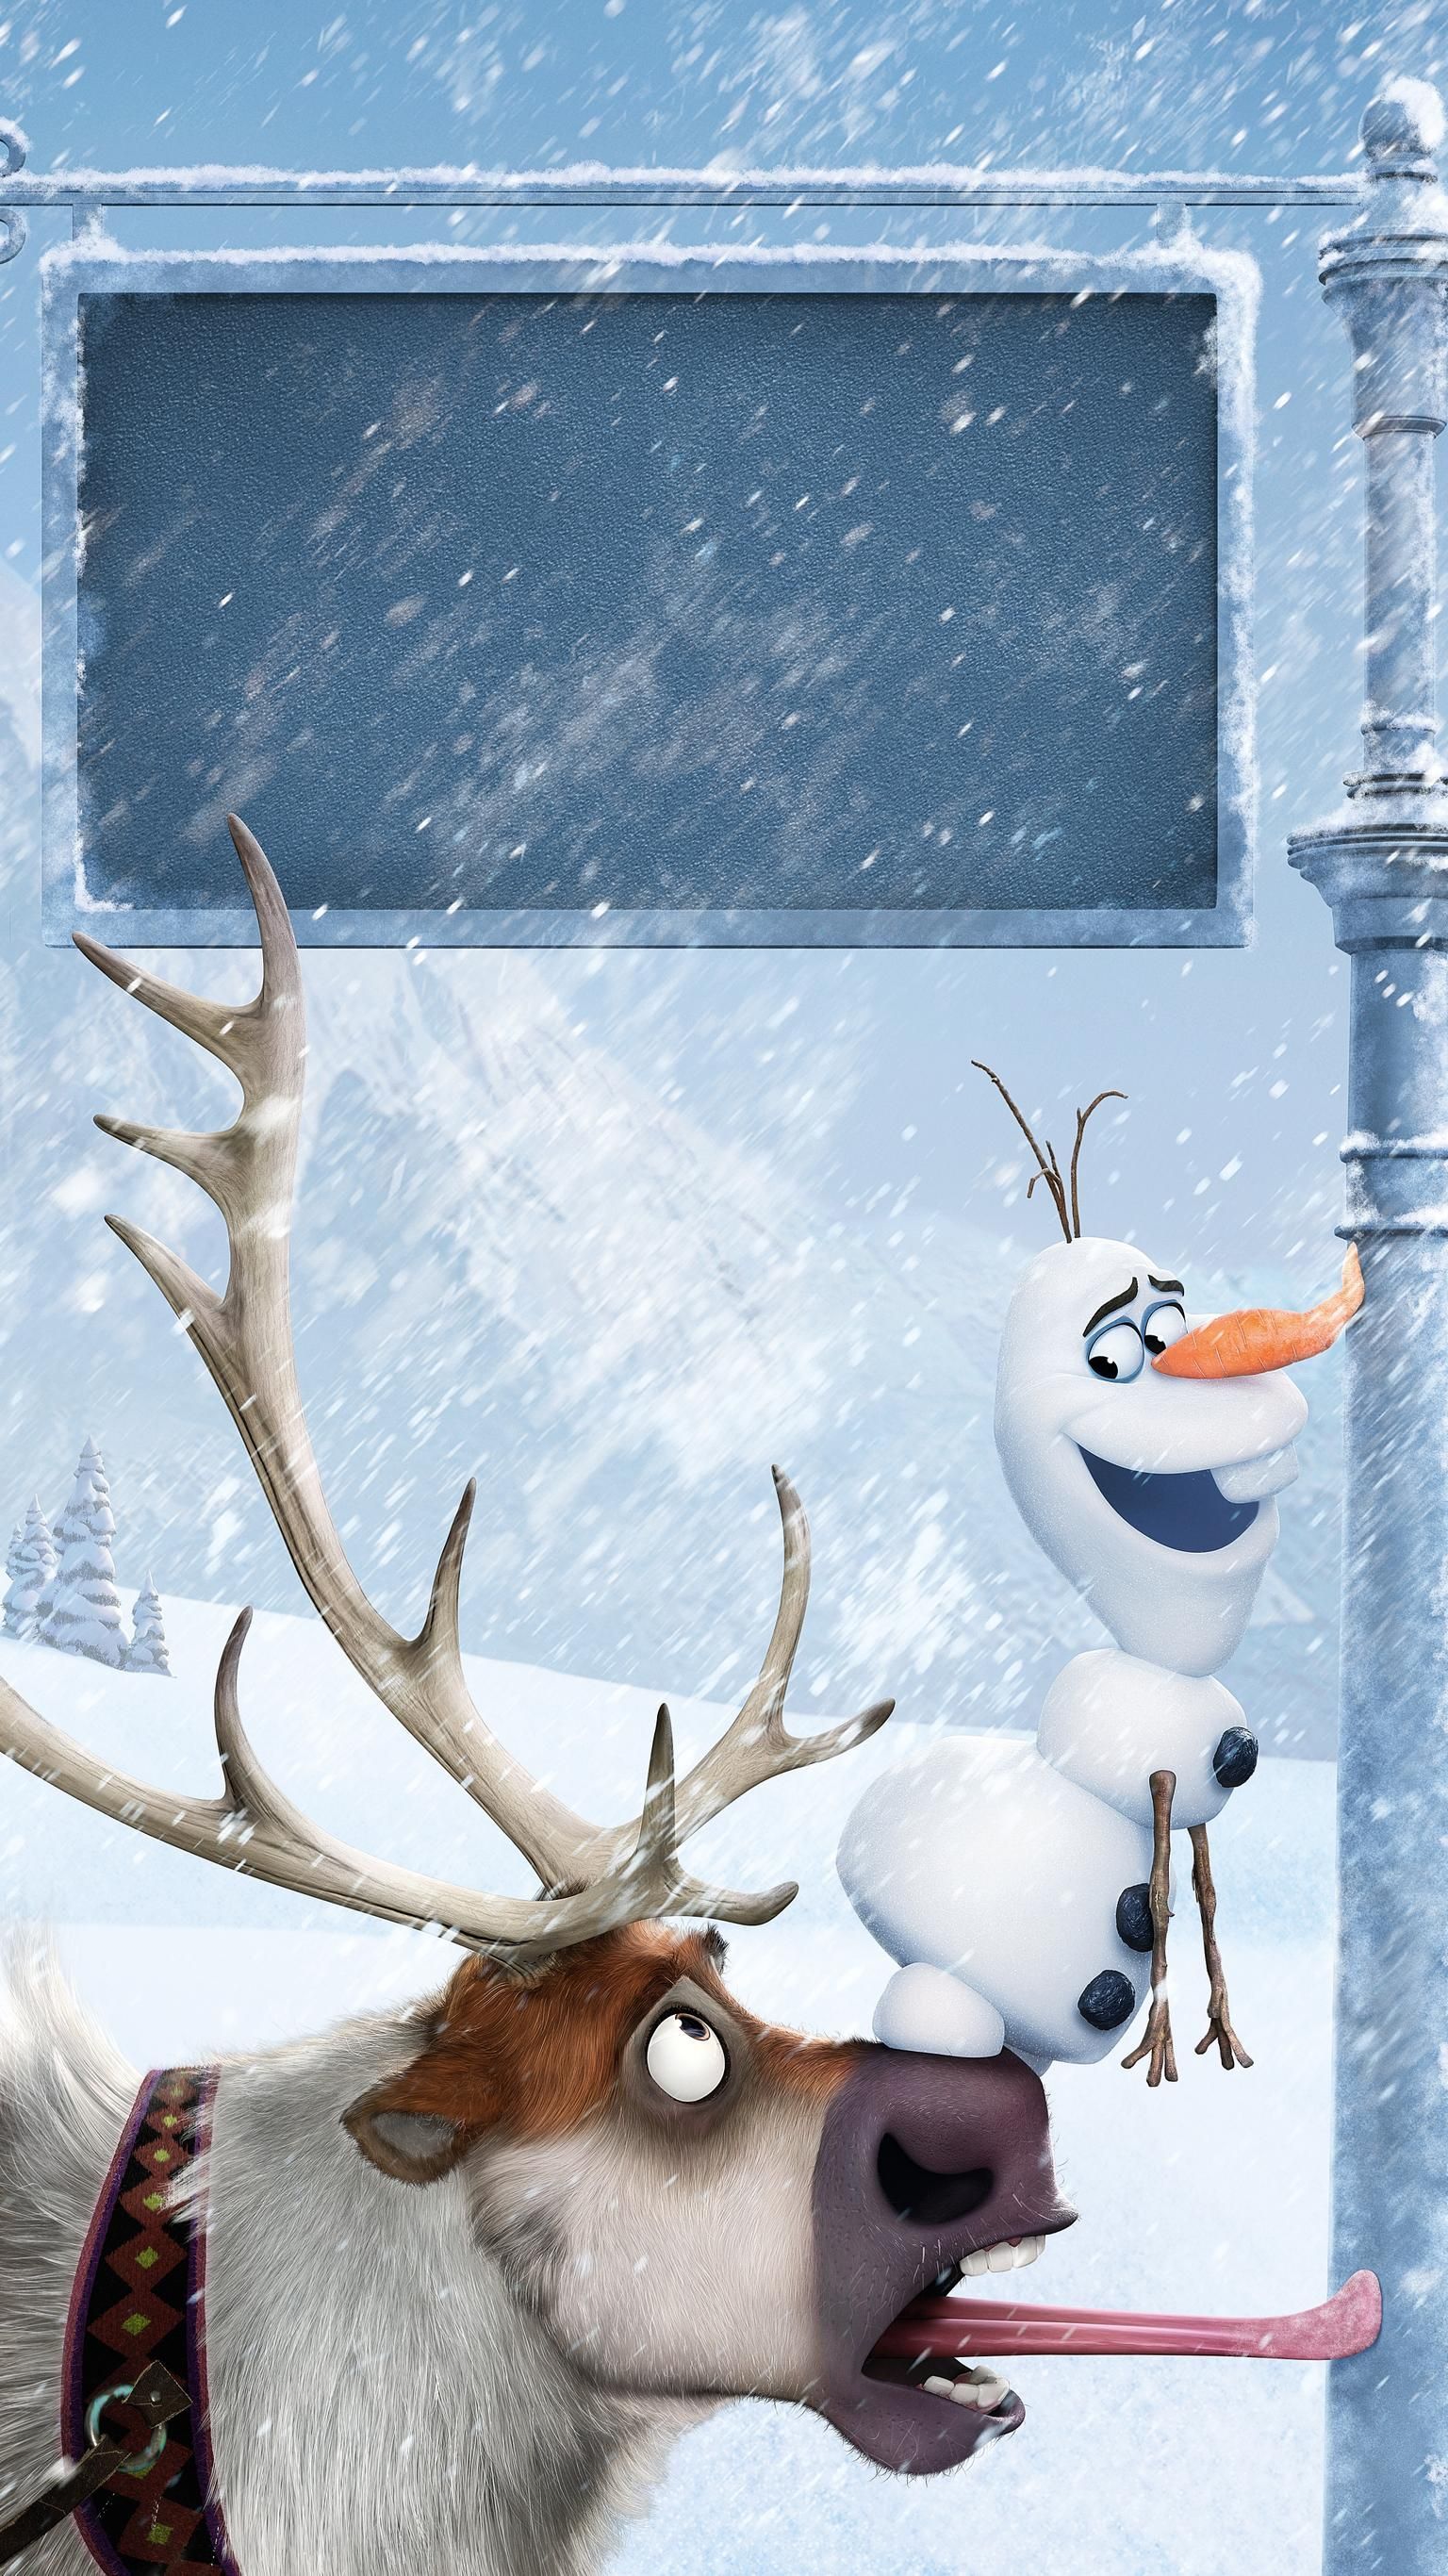 Frozen (2013) Phone Wallpaper. Moviemania. Disney phone wallpaper, Frozen wallpaper, Disney phone background